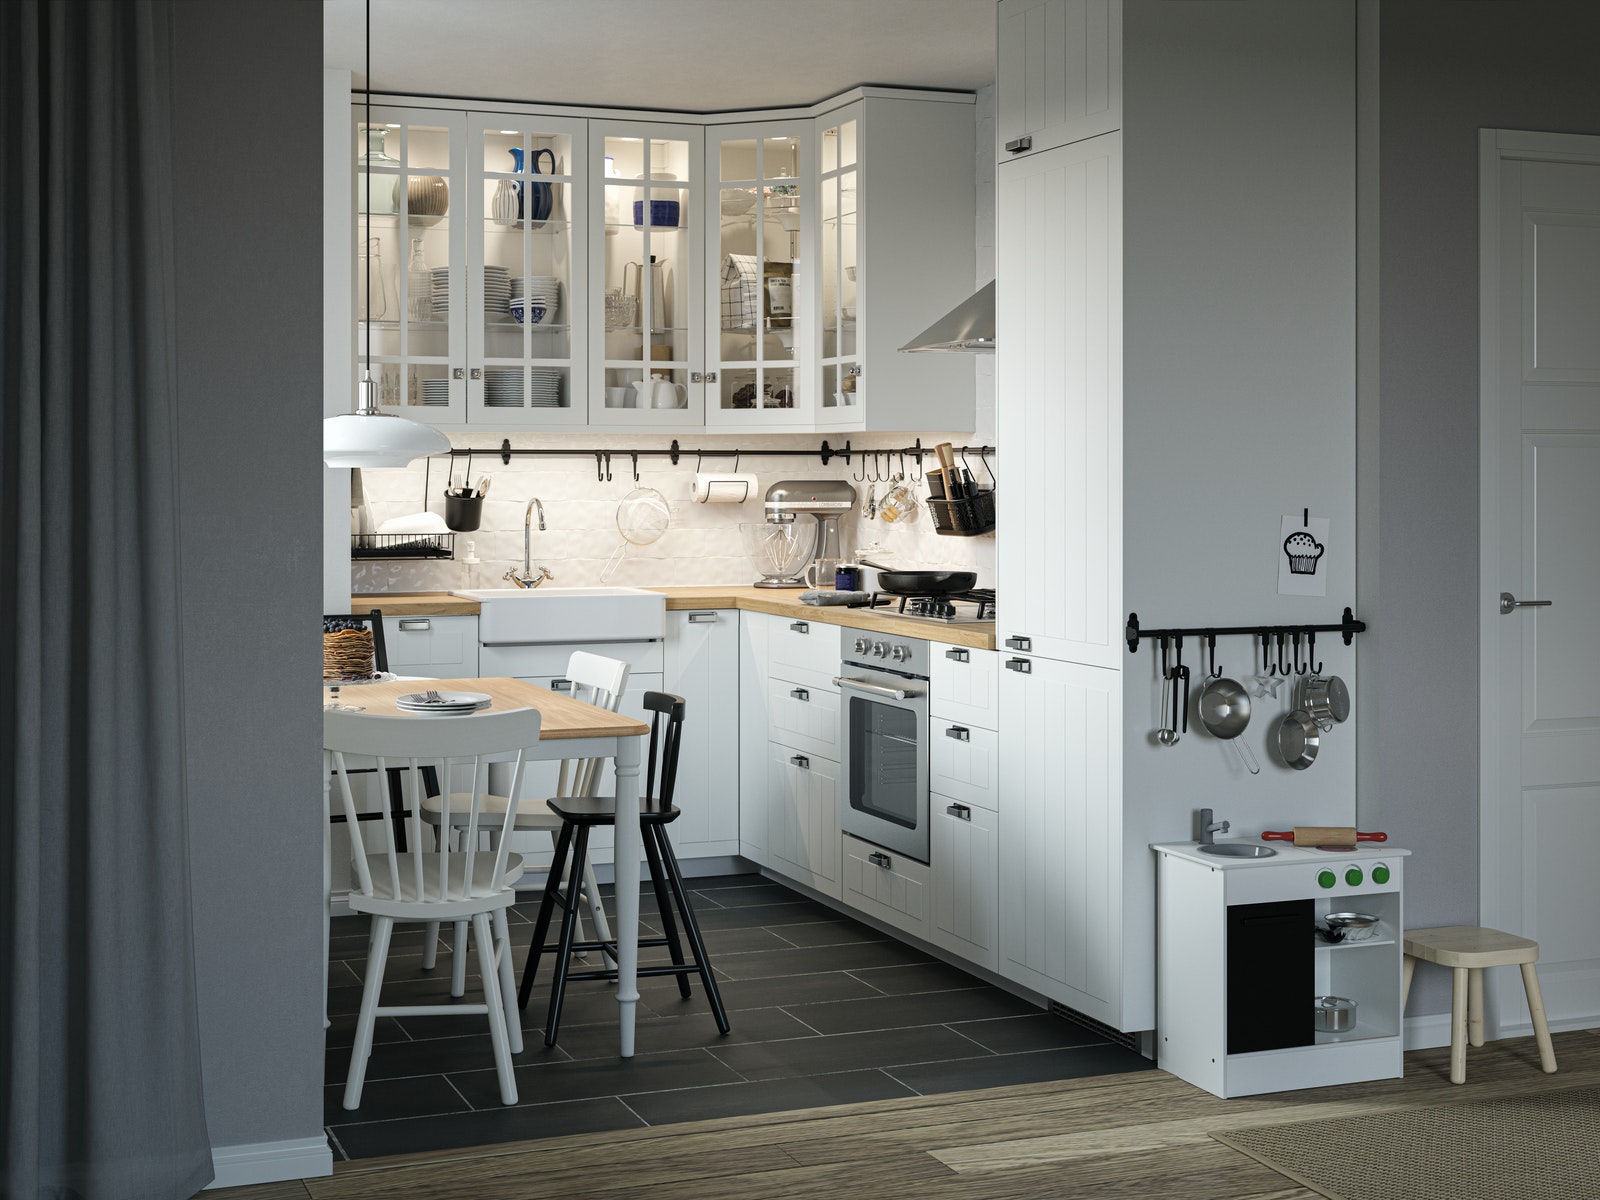 IKEA - Μια άνετη κουζίνα για μαγειρική, παιχνίδι και χρόνο με τους αγαπημένους σας